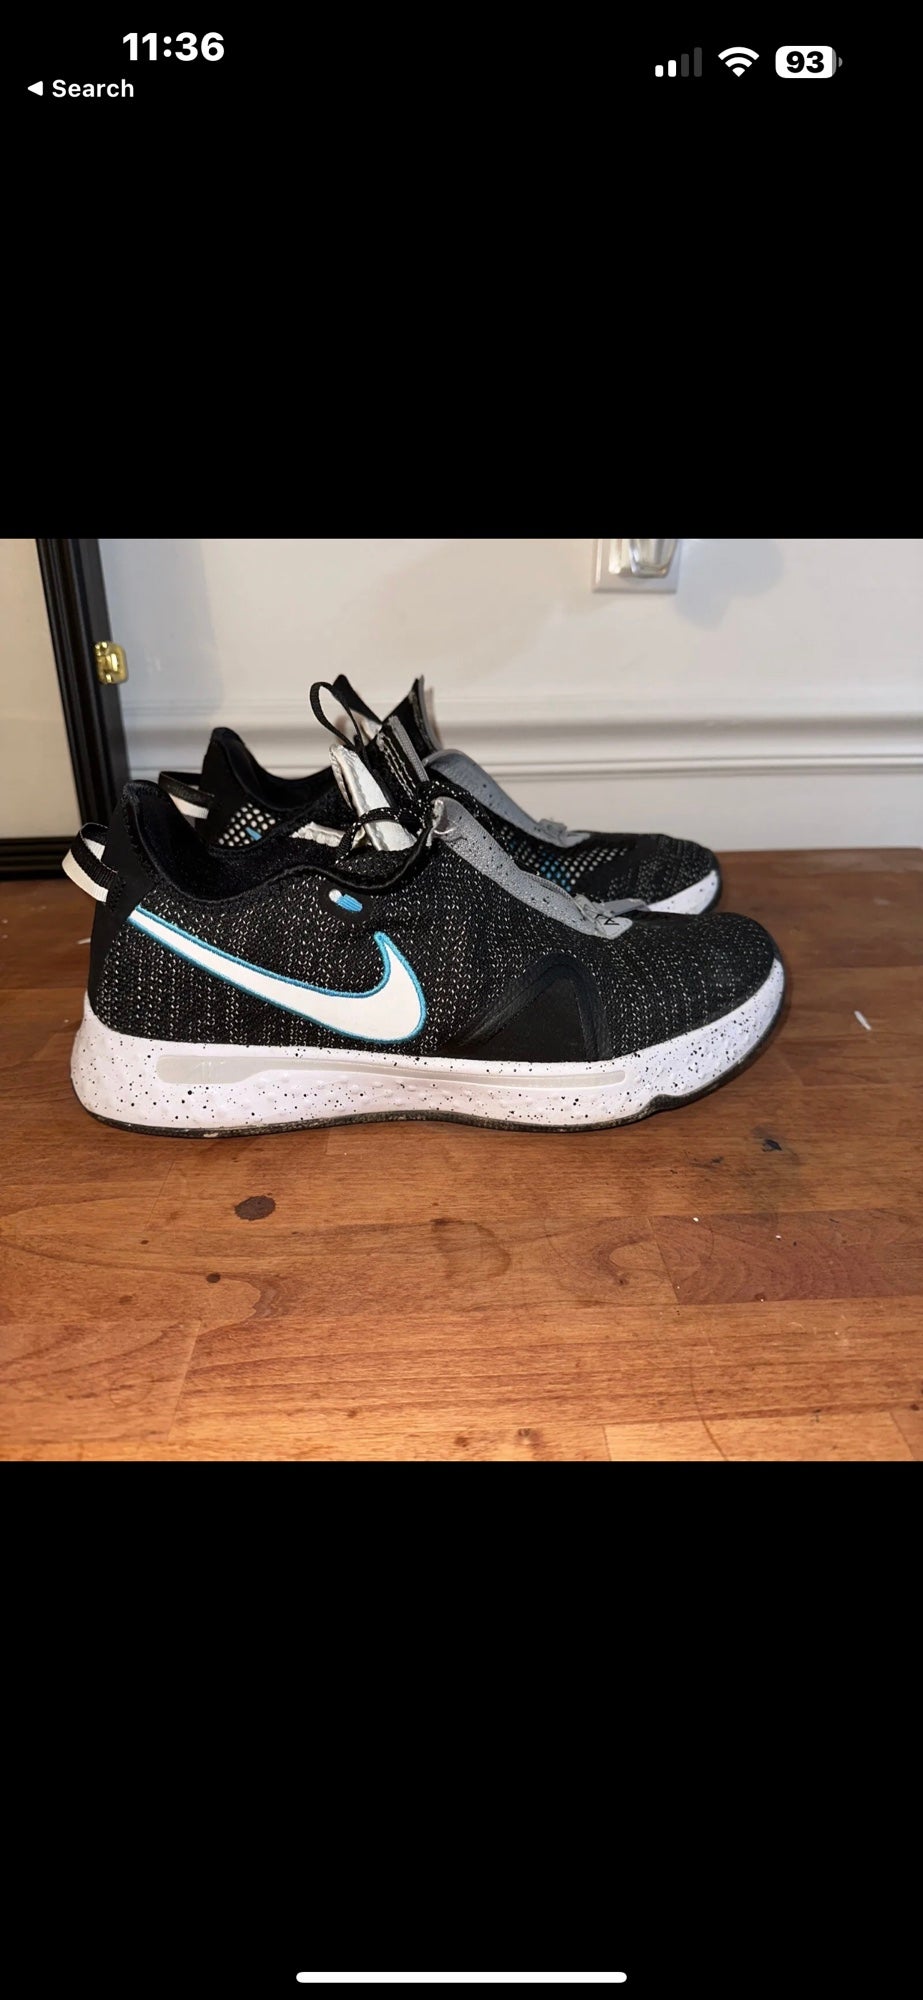 Men's Size 12 (Women's 13) Nike paul george Shoes